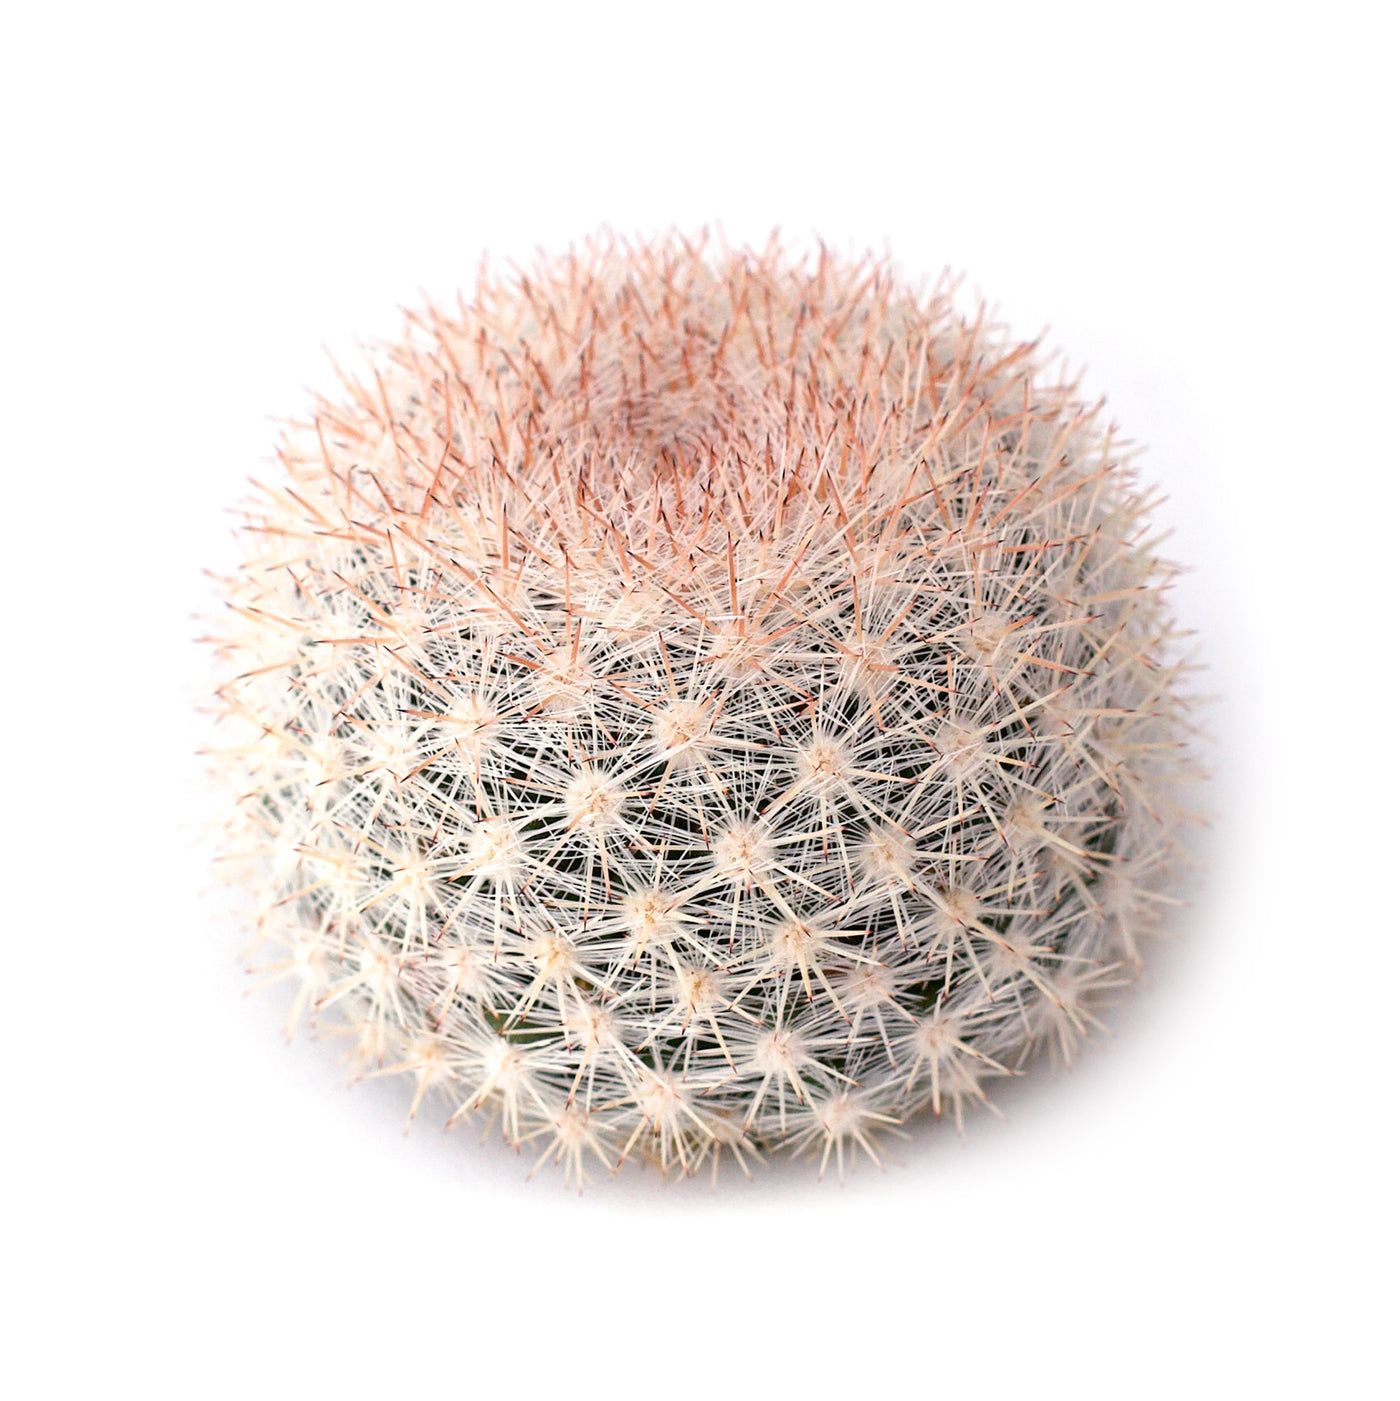 Mammillaria candida 'Snowball Cactus'